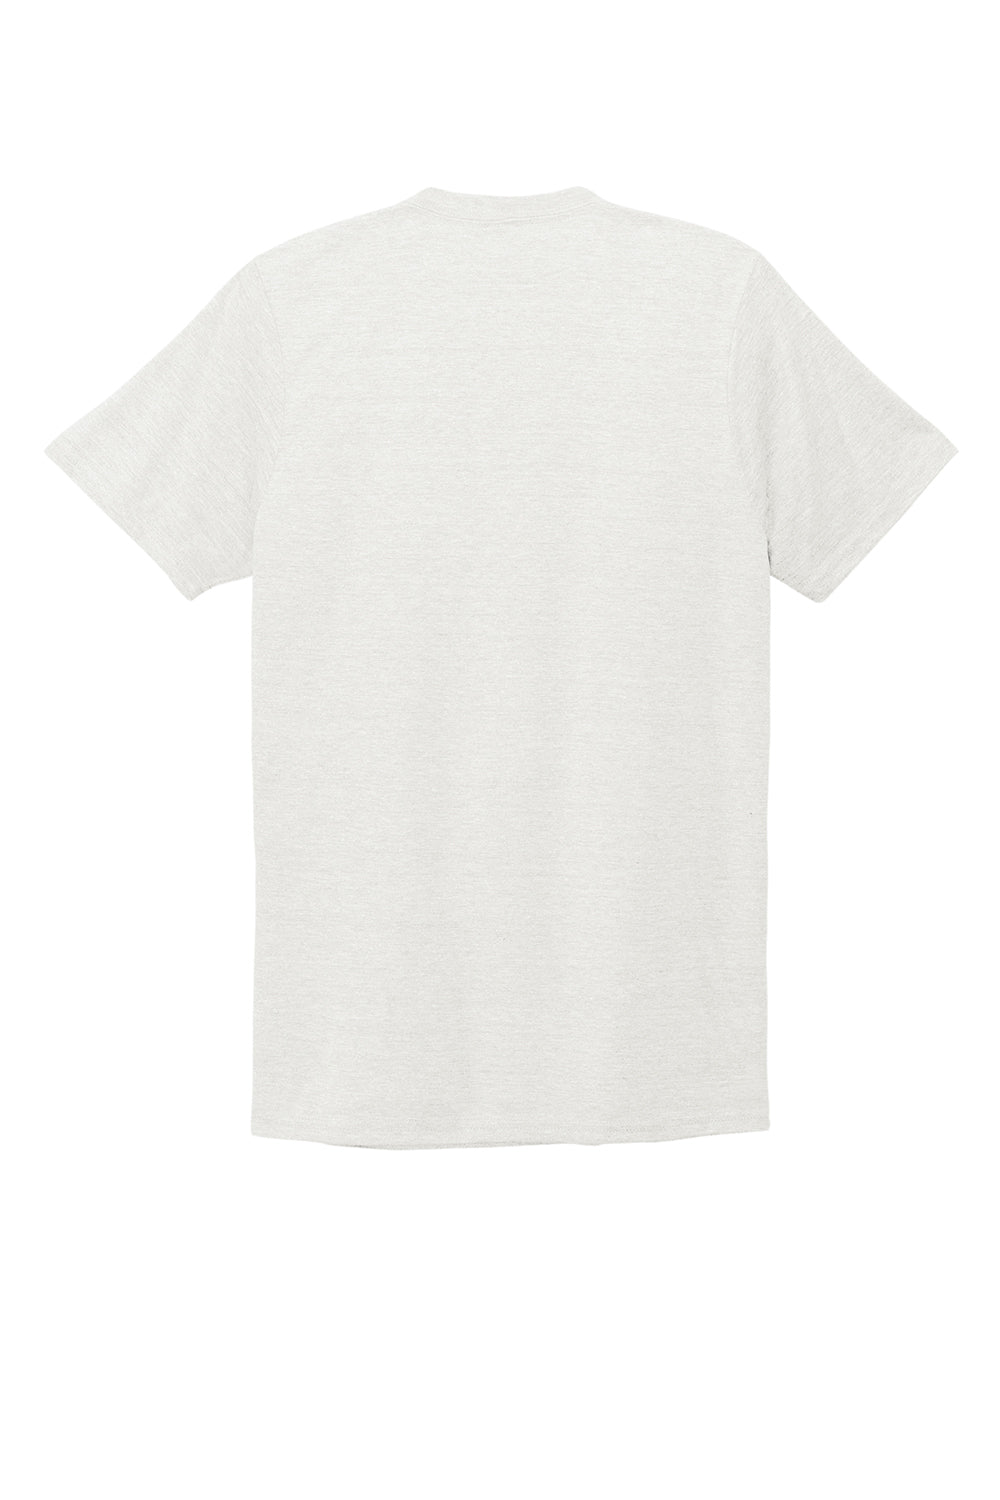 Allmade AL2014 Mens Short Sleeve V-Neck T-Shirt Fairly White Flat Back